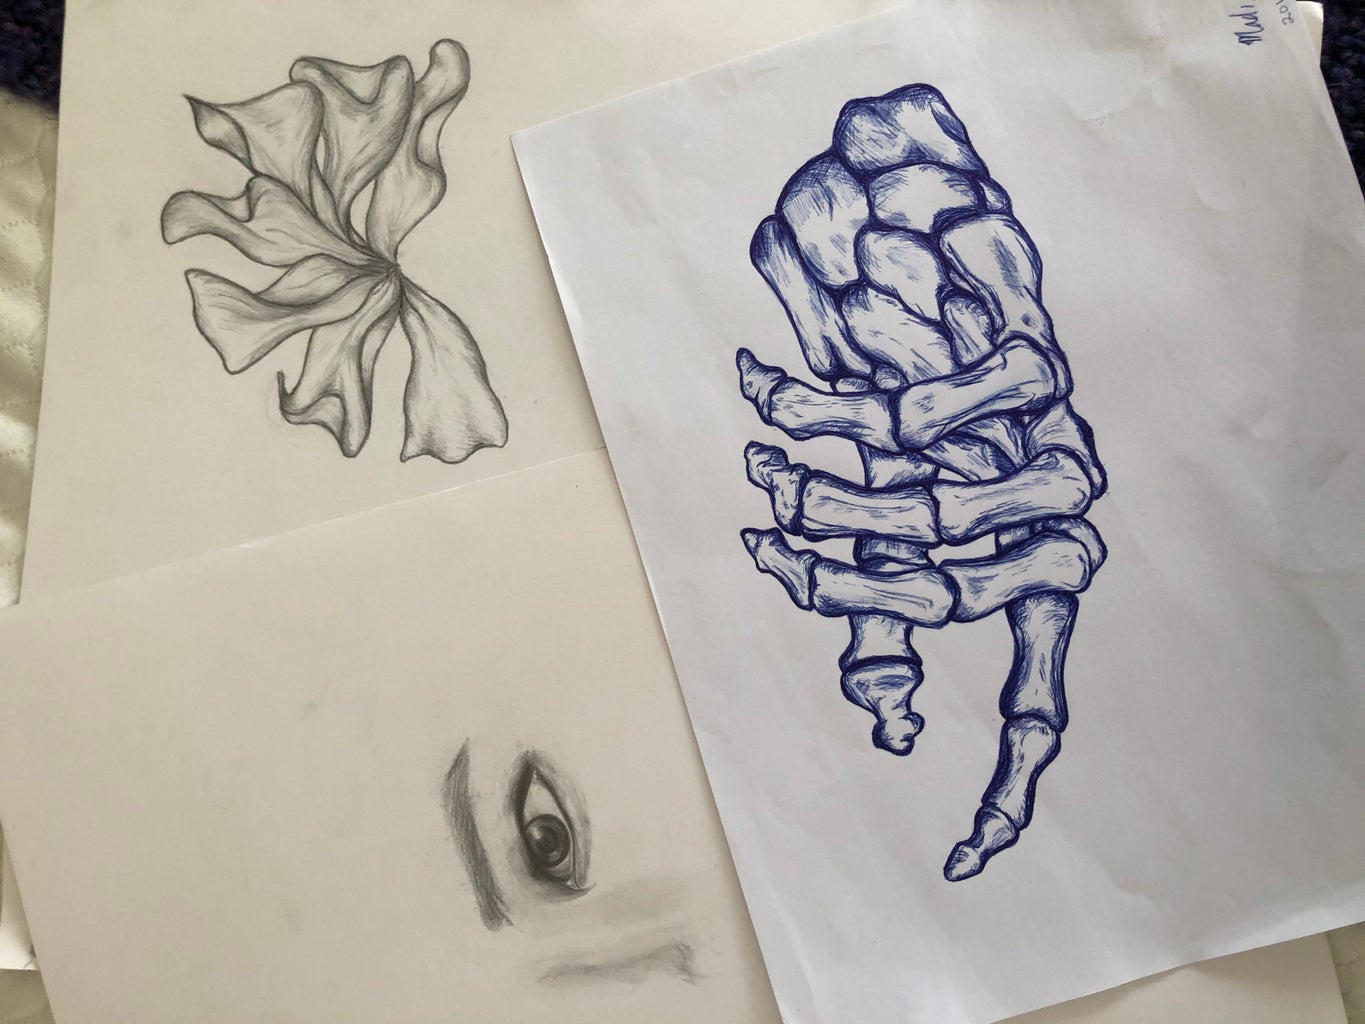 Three drawings